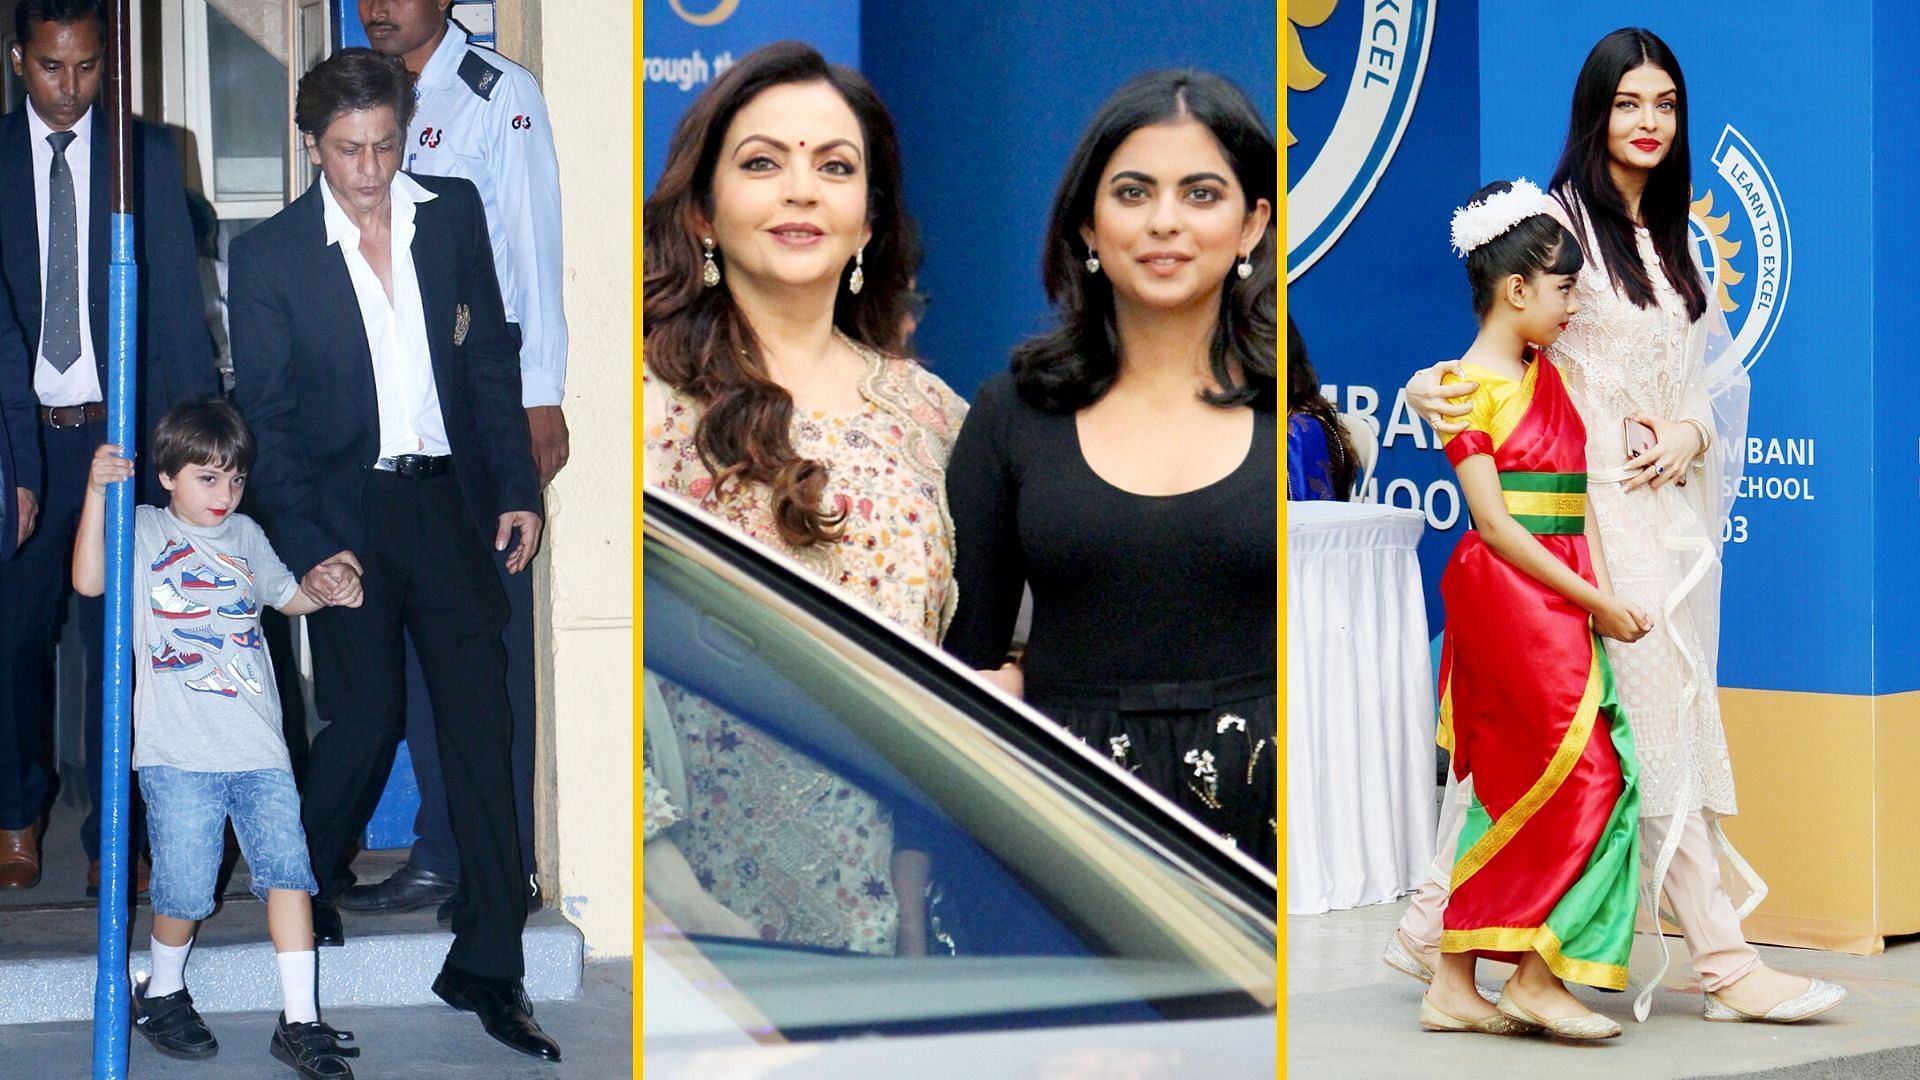 Shah Rukh Khan, Aishwarya Rai Bachchan arrive with their kids for the annual function.